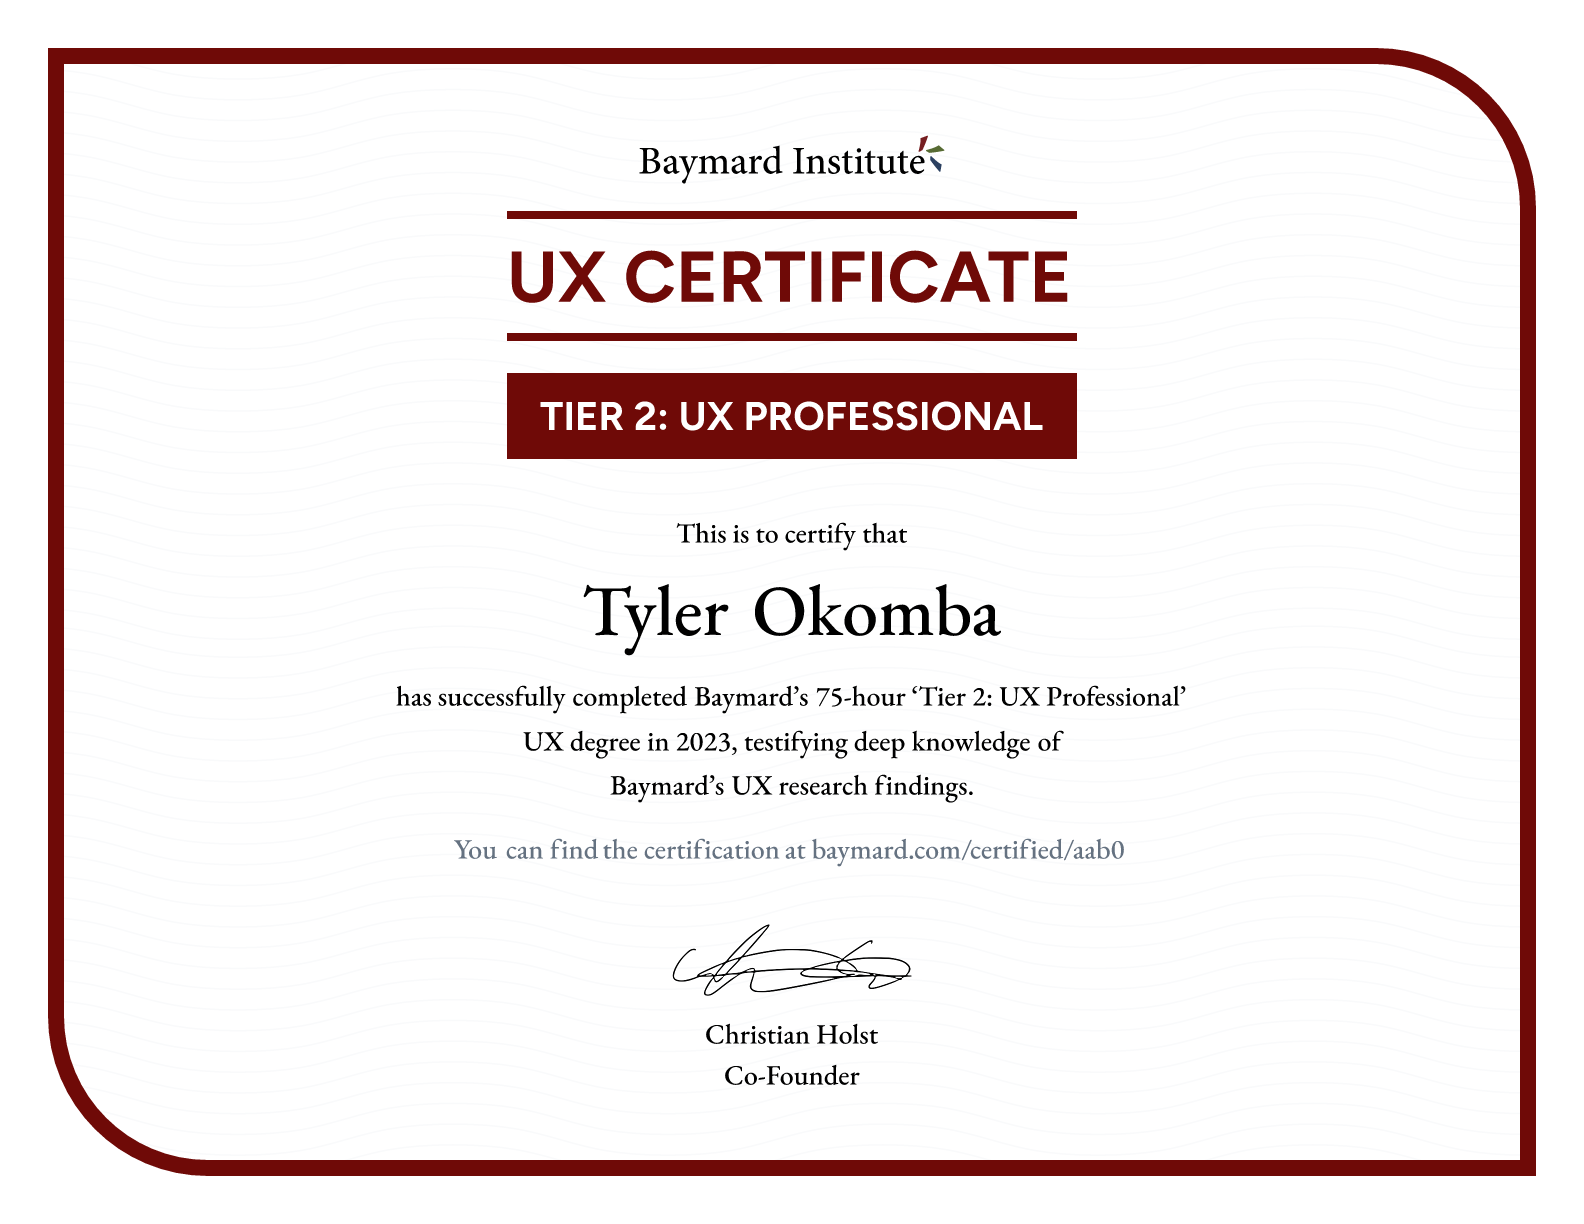 Tyler Okomba’s certificate